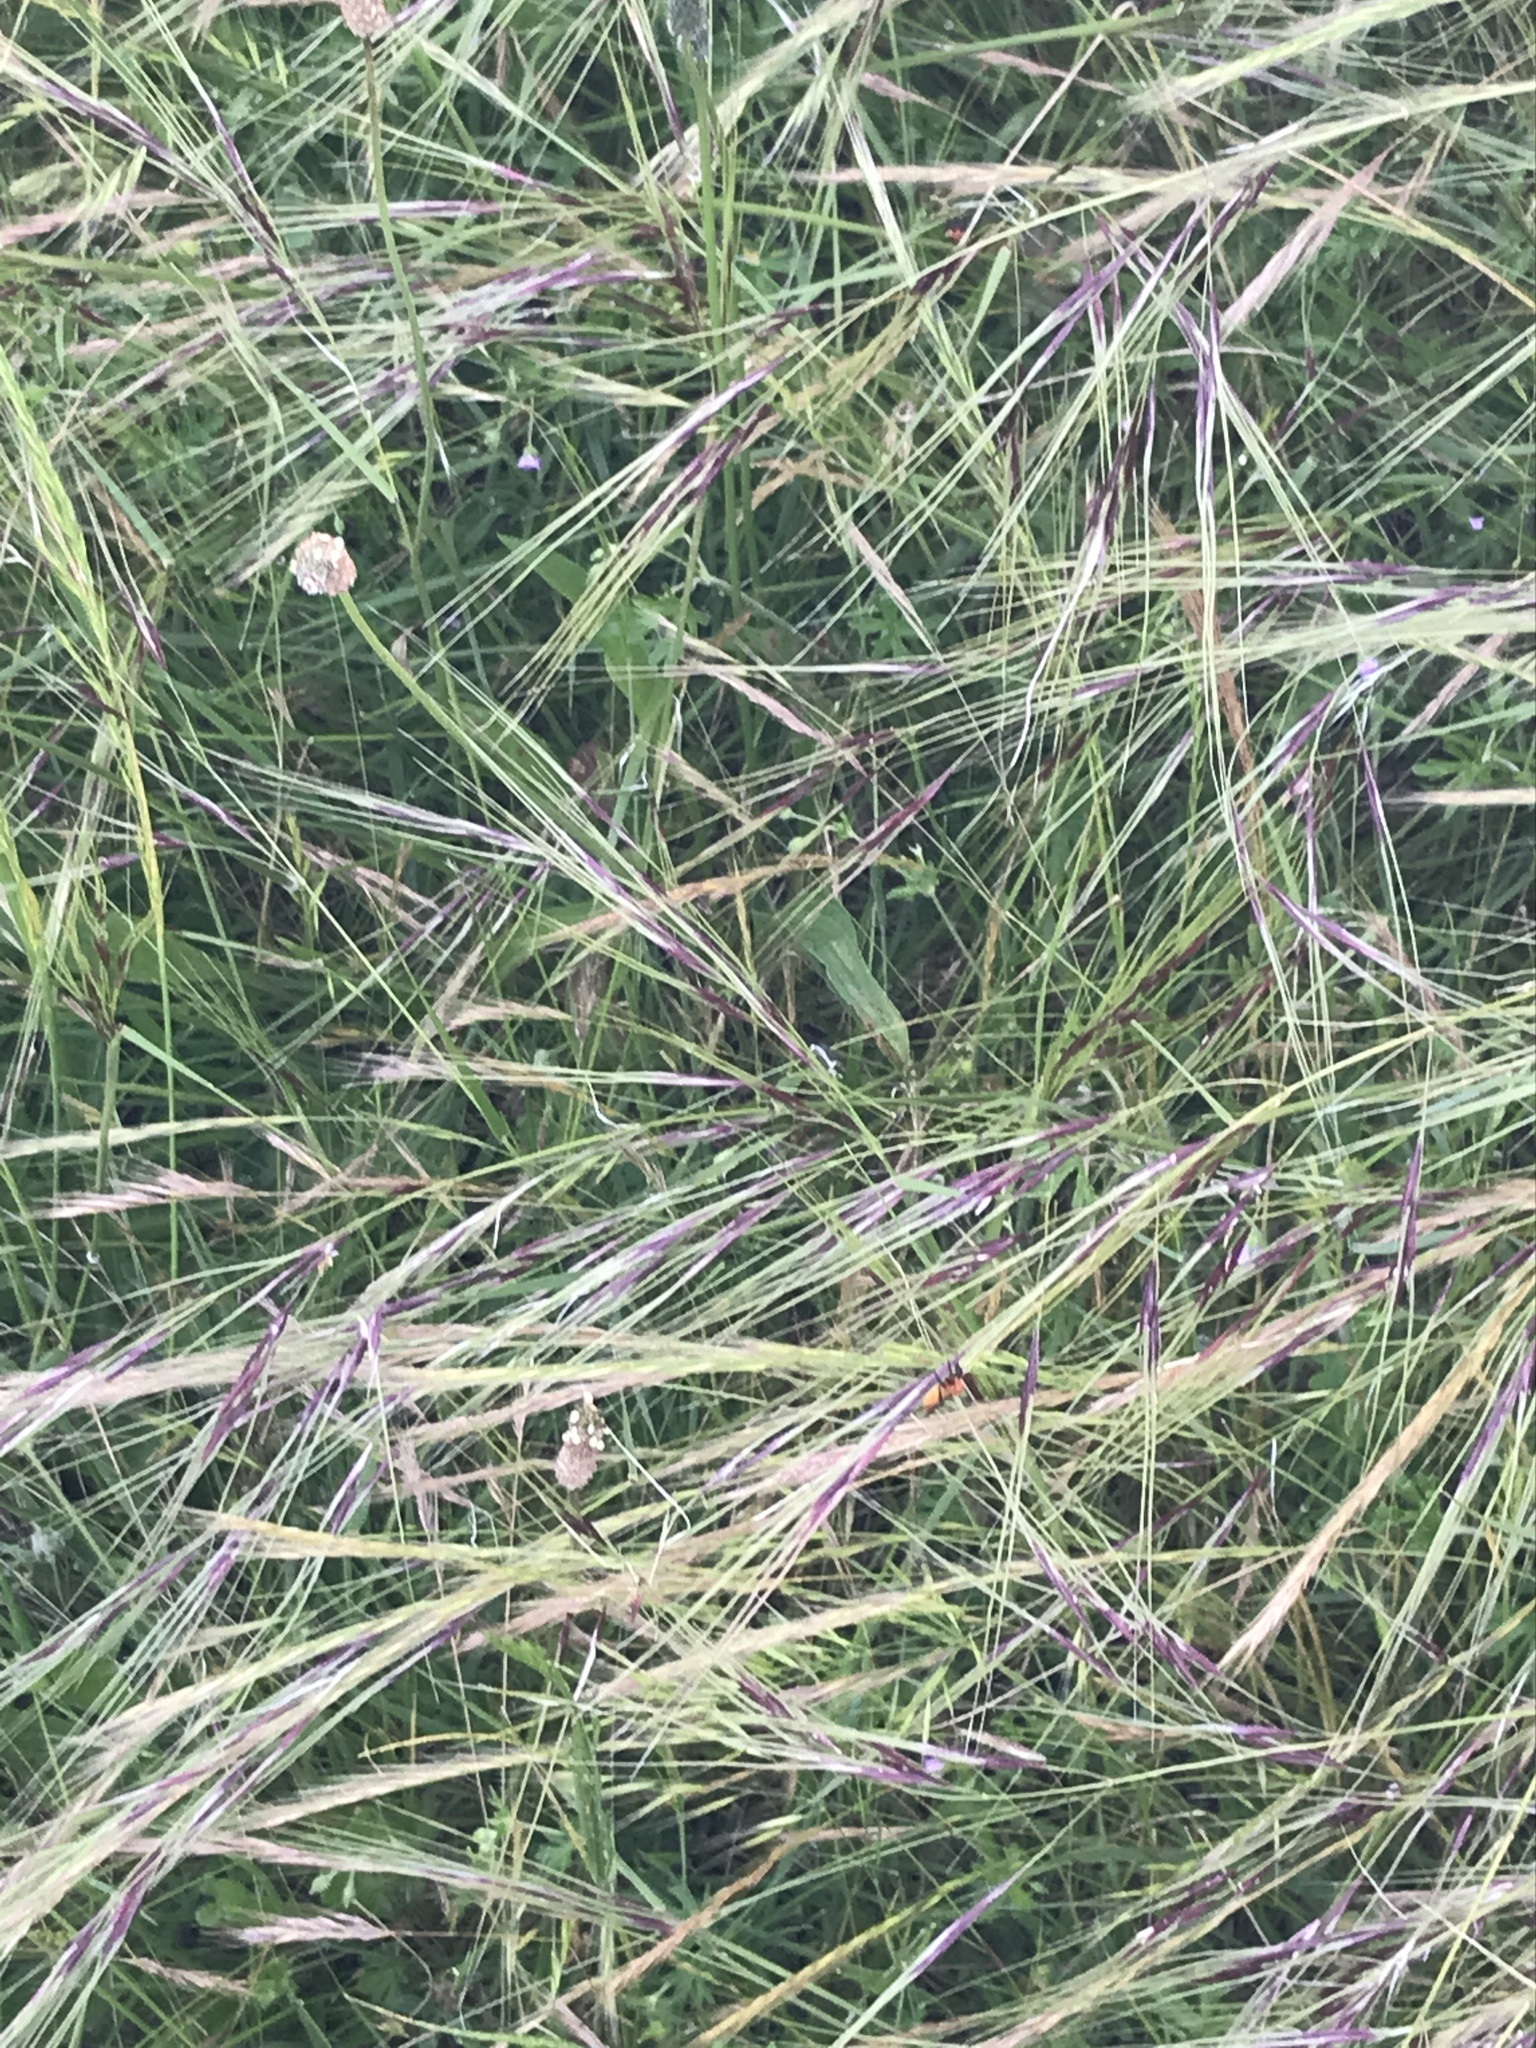 Close-up image of distinctive purple Chilean needle grass